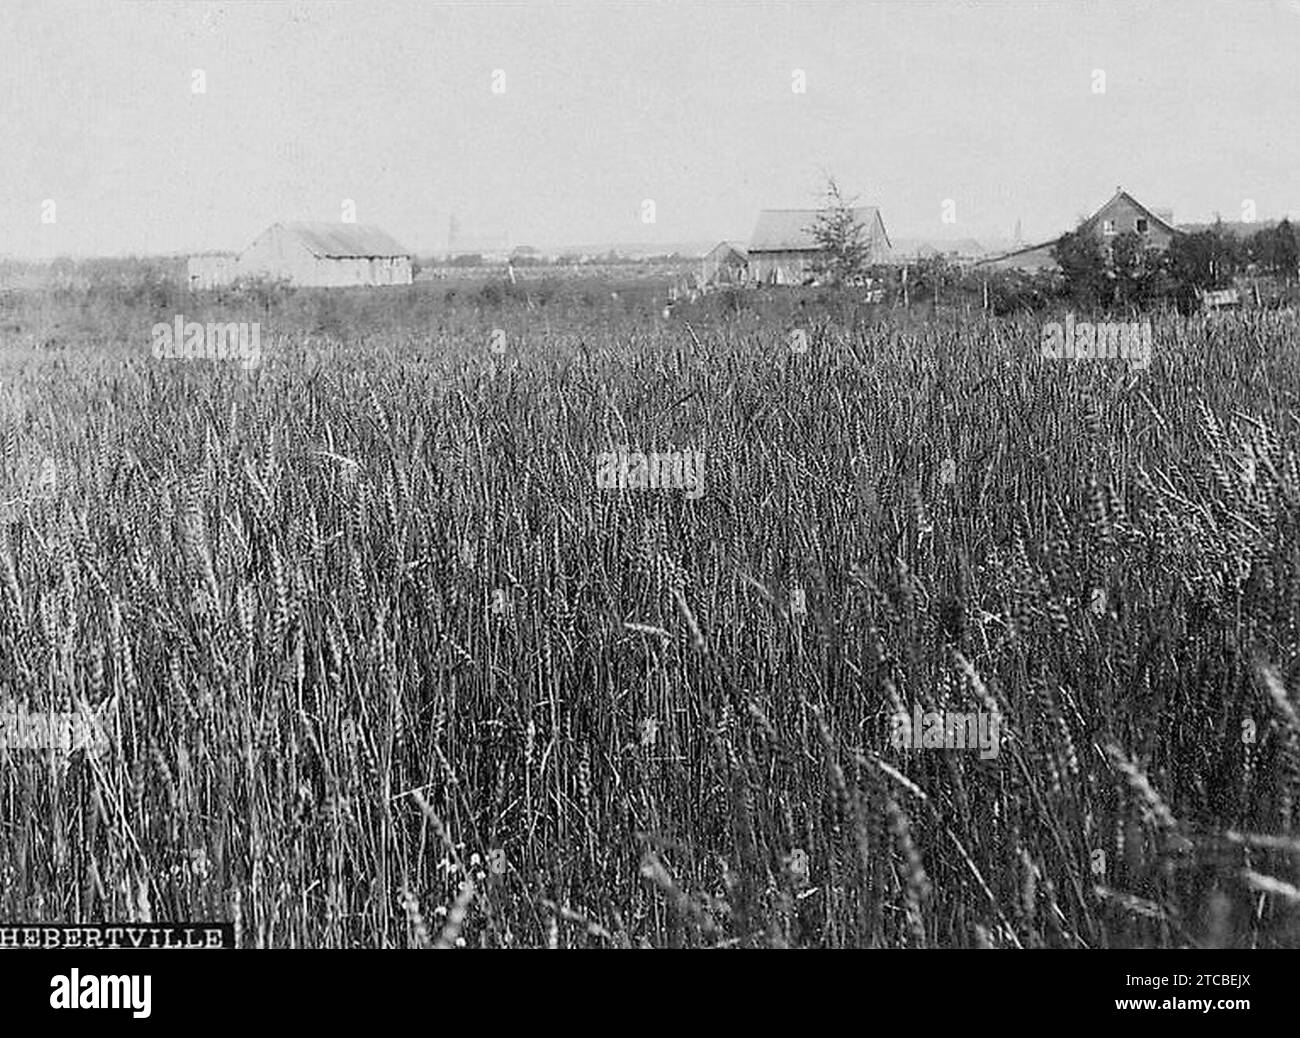 Campi di grano a Hebertville, lago Saint-John. Foto Stock